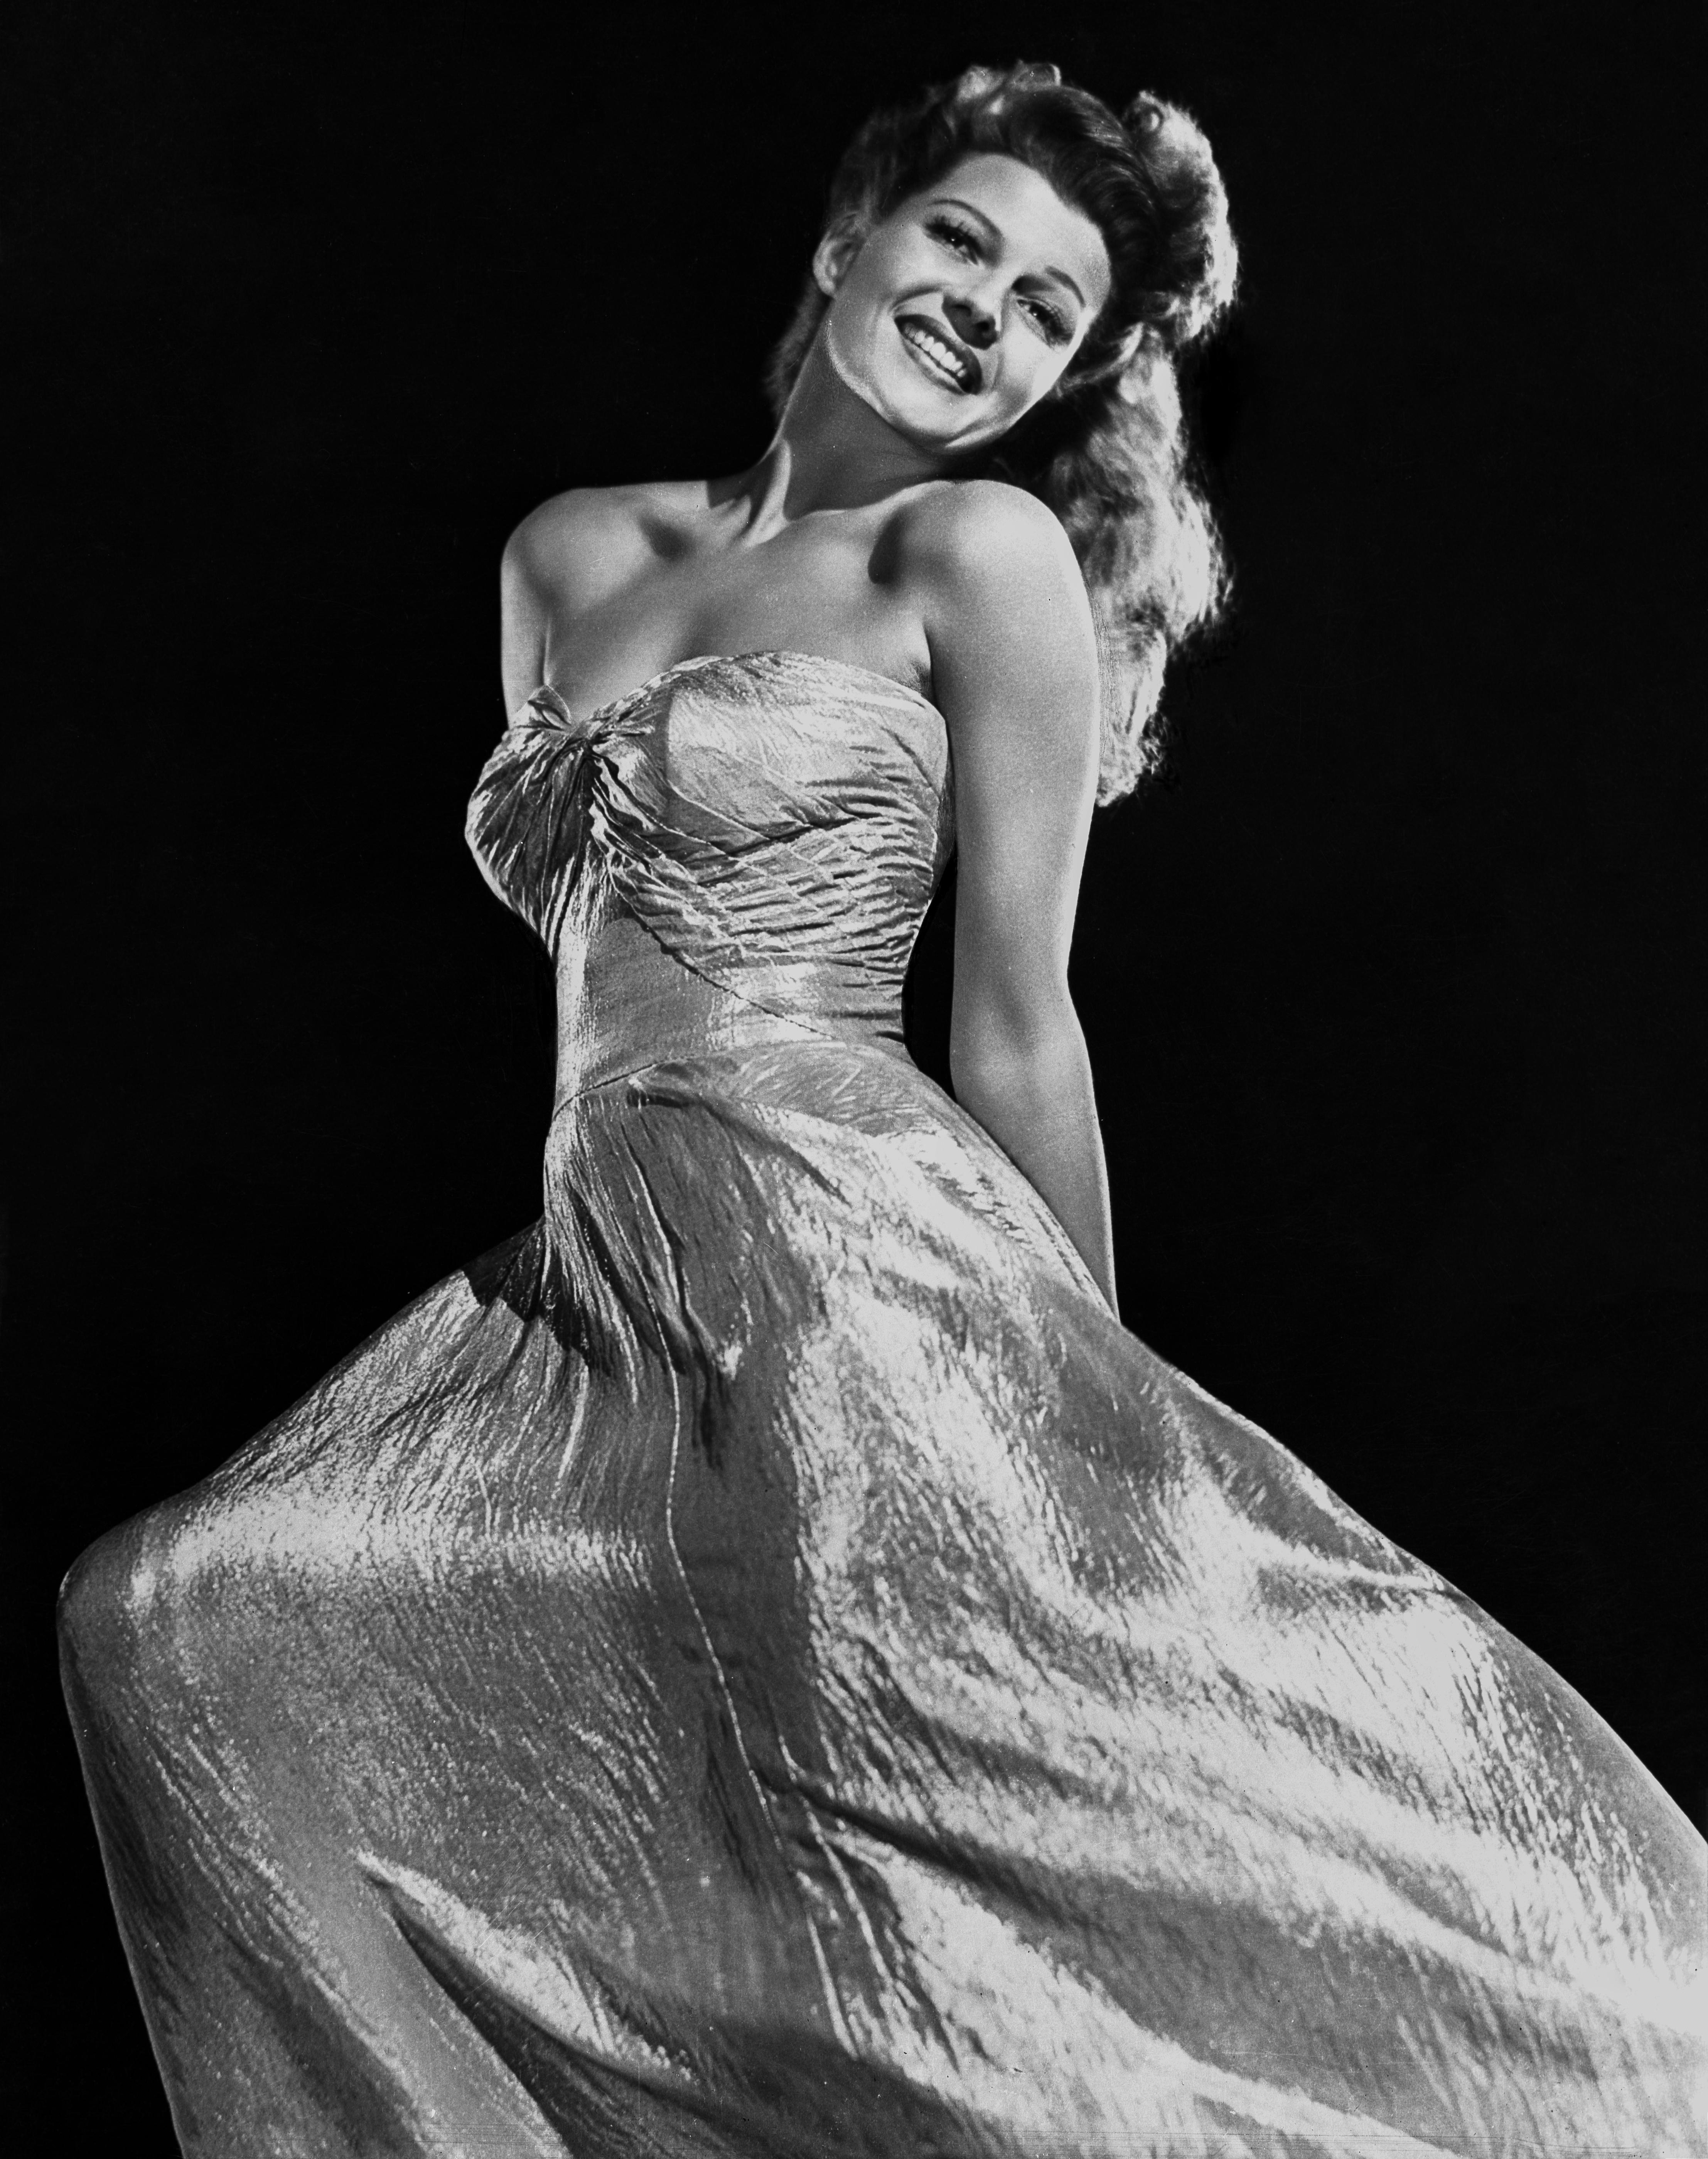 Robert Coburn Portrait Photograph - Rita Hayworth Smiling in Gown Fine Art Print